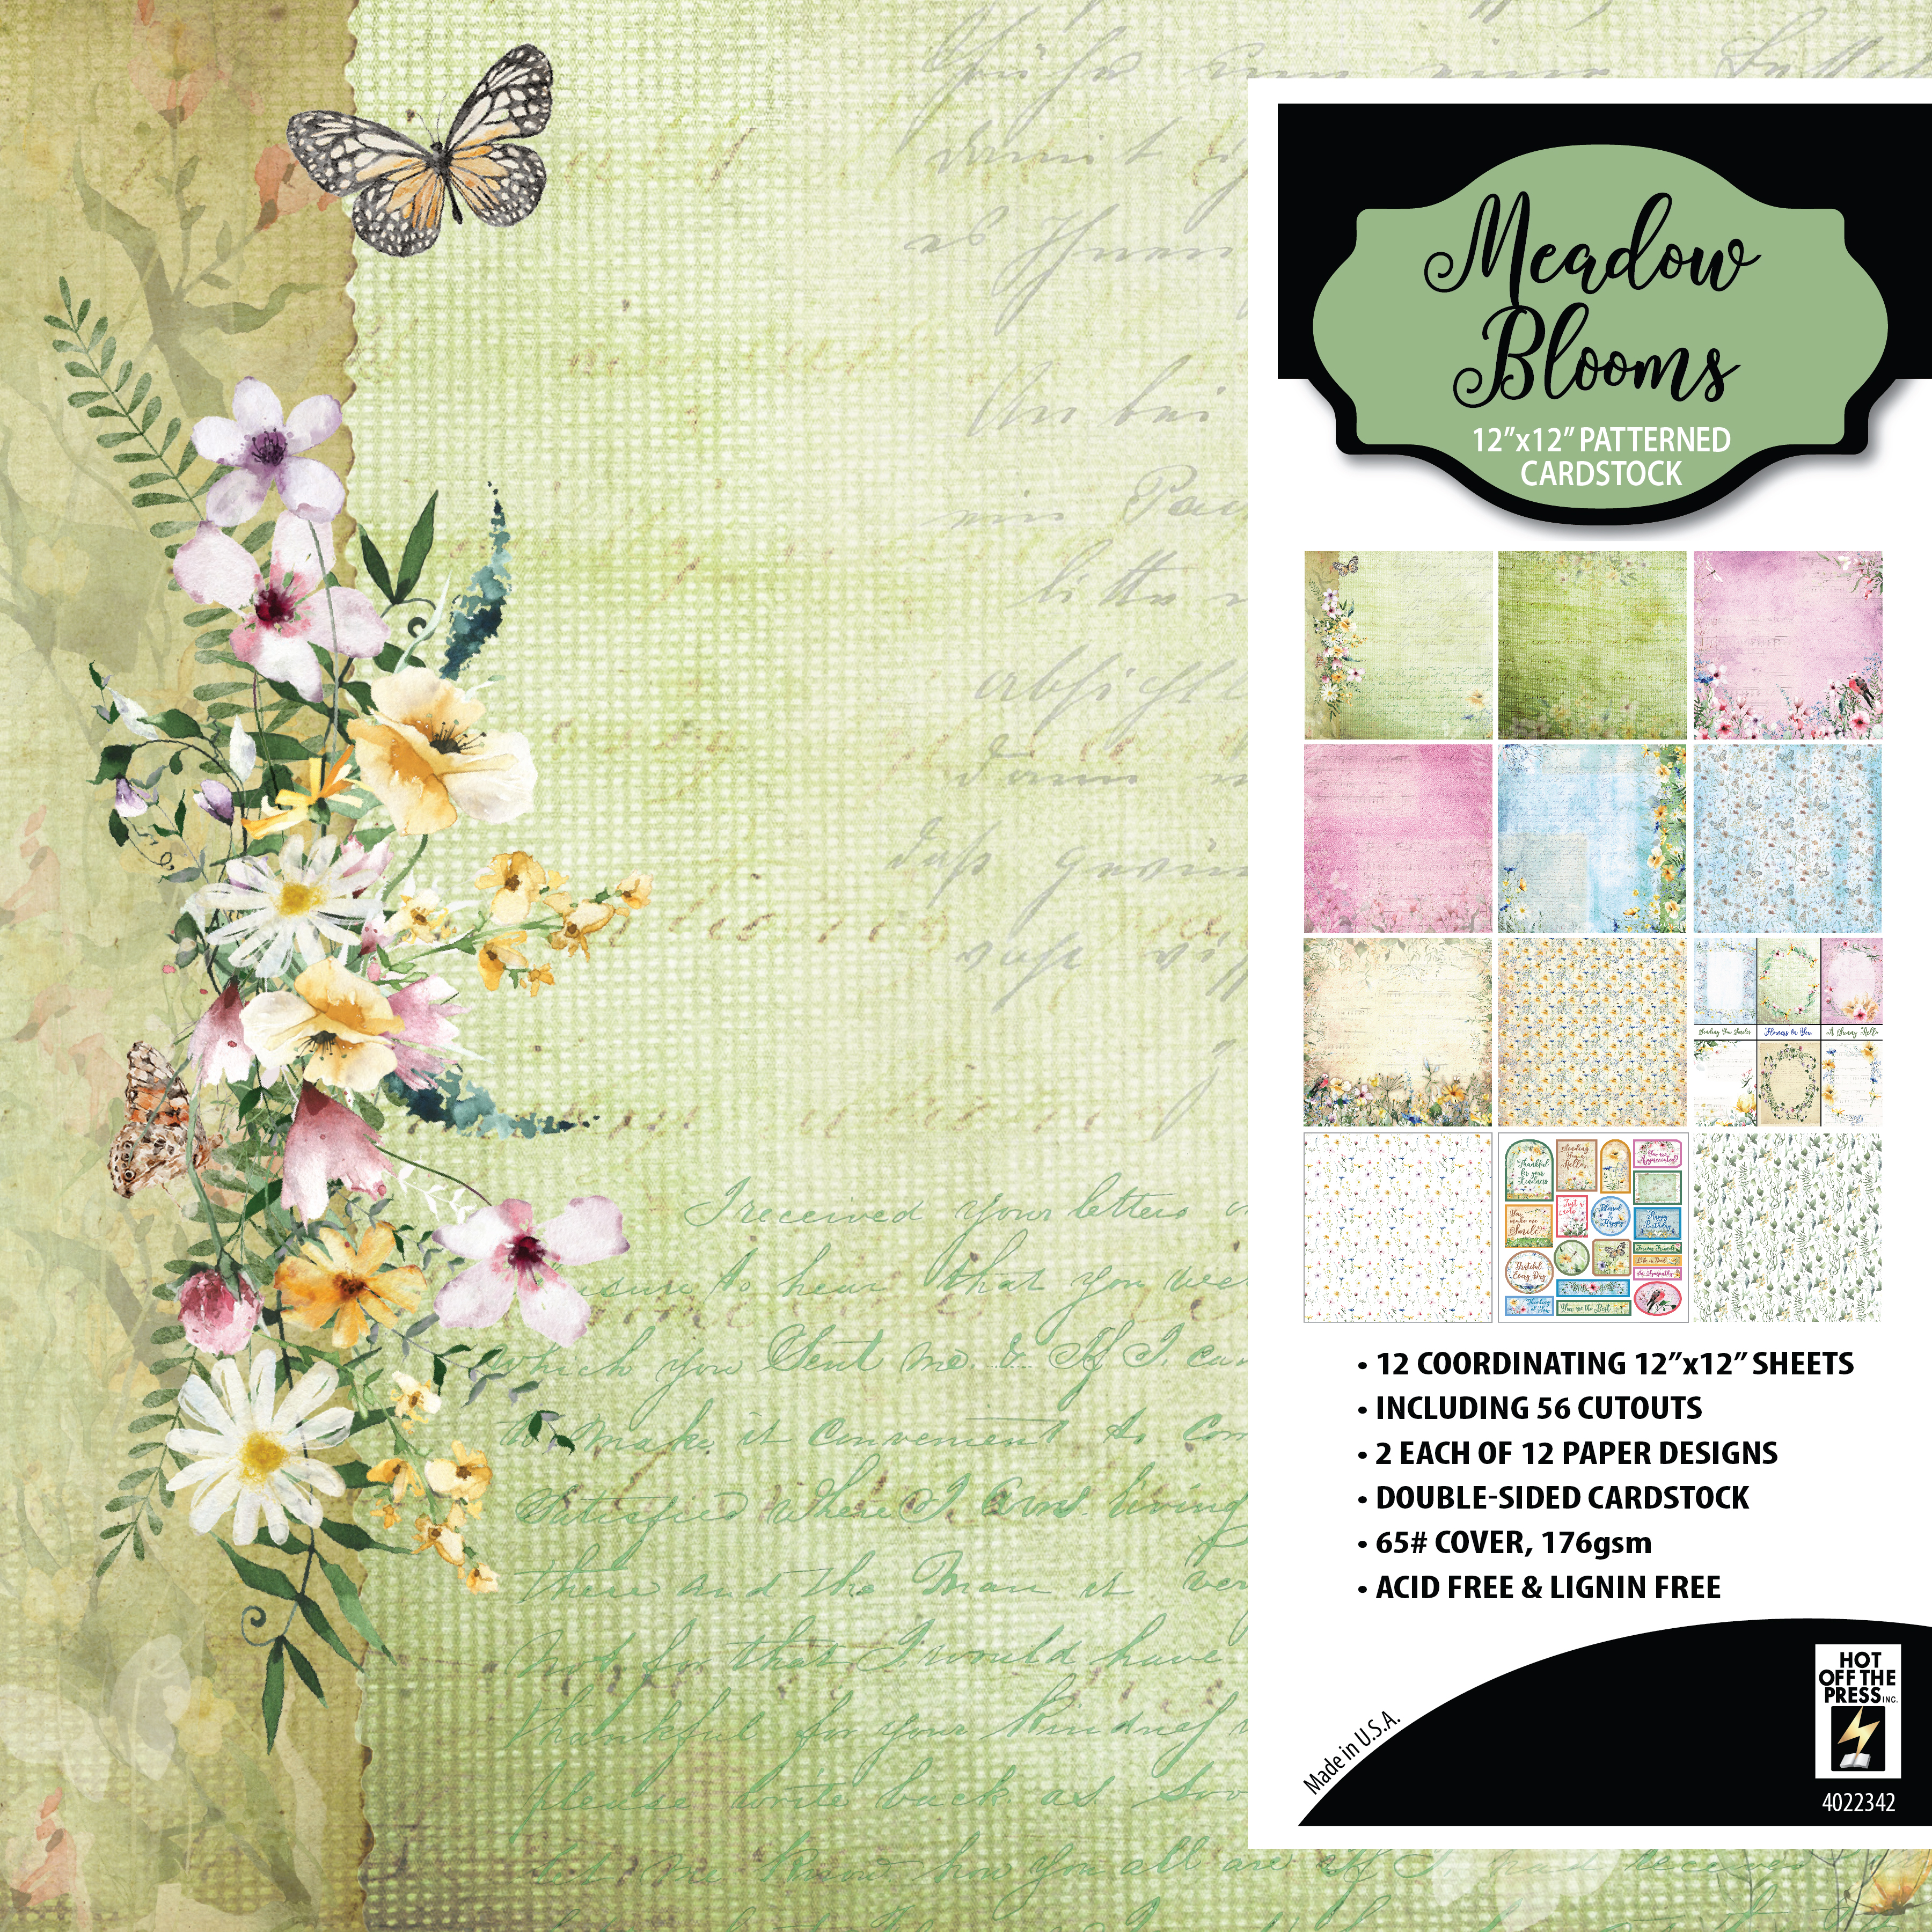 Meadow Blooms 12x12 Patterned Cardstock